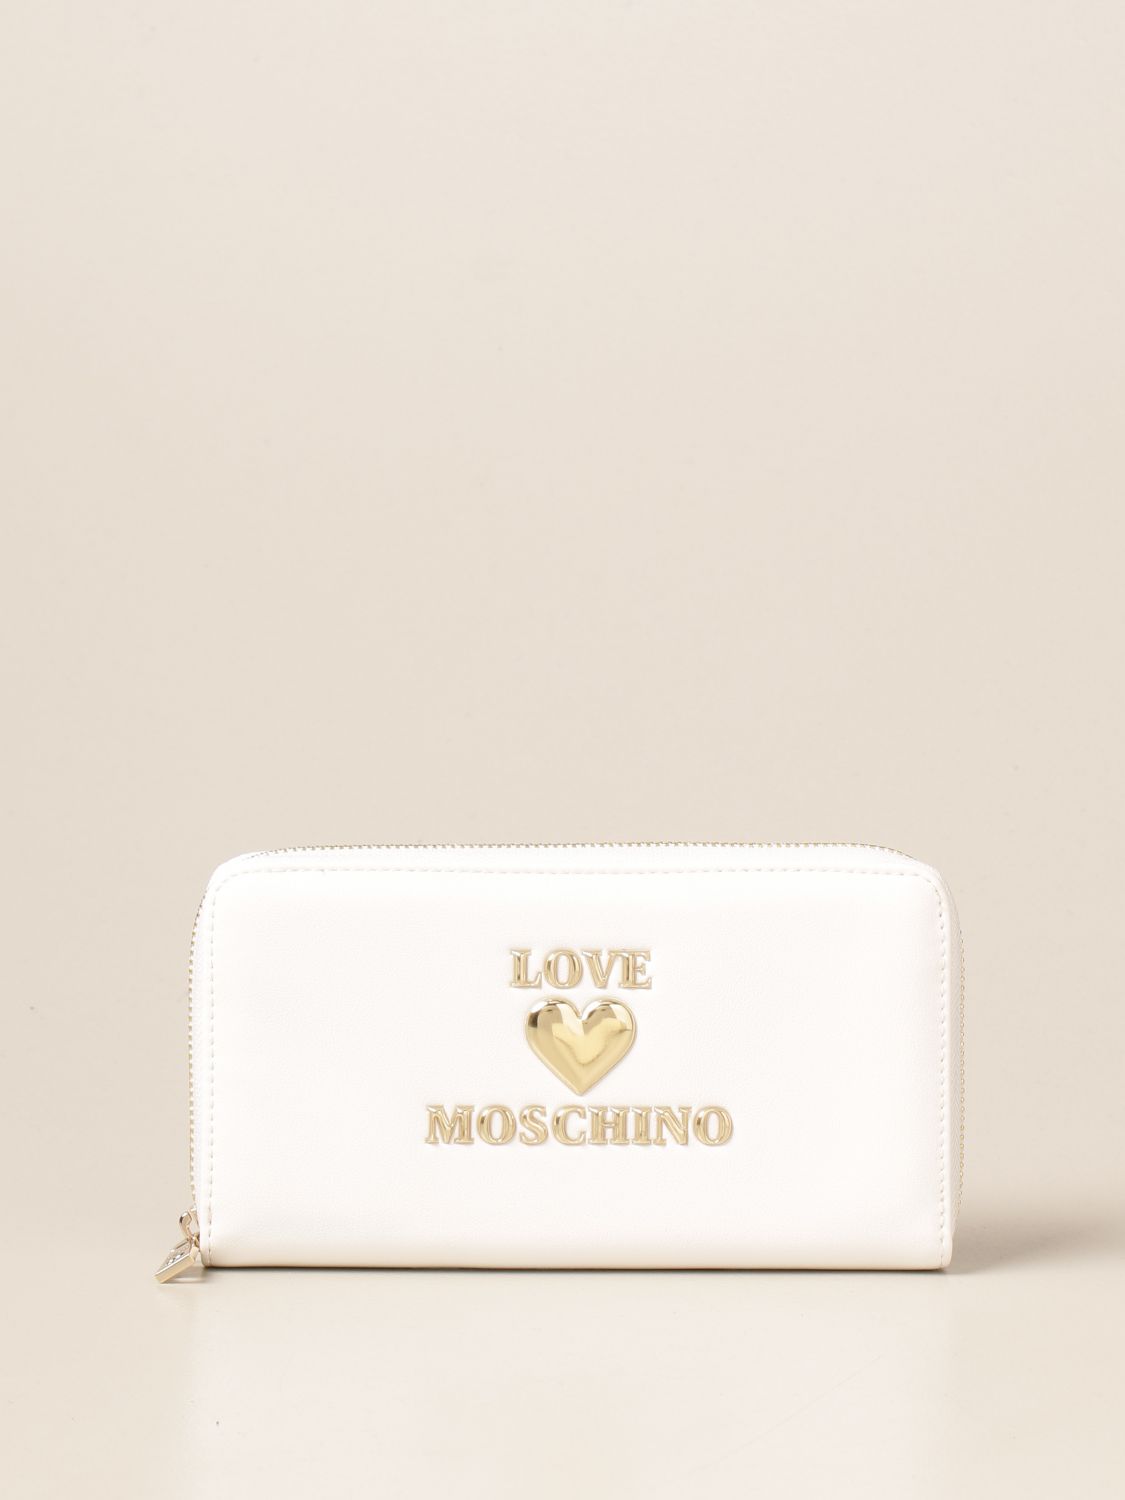 love moschino wallet womens